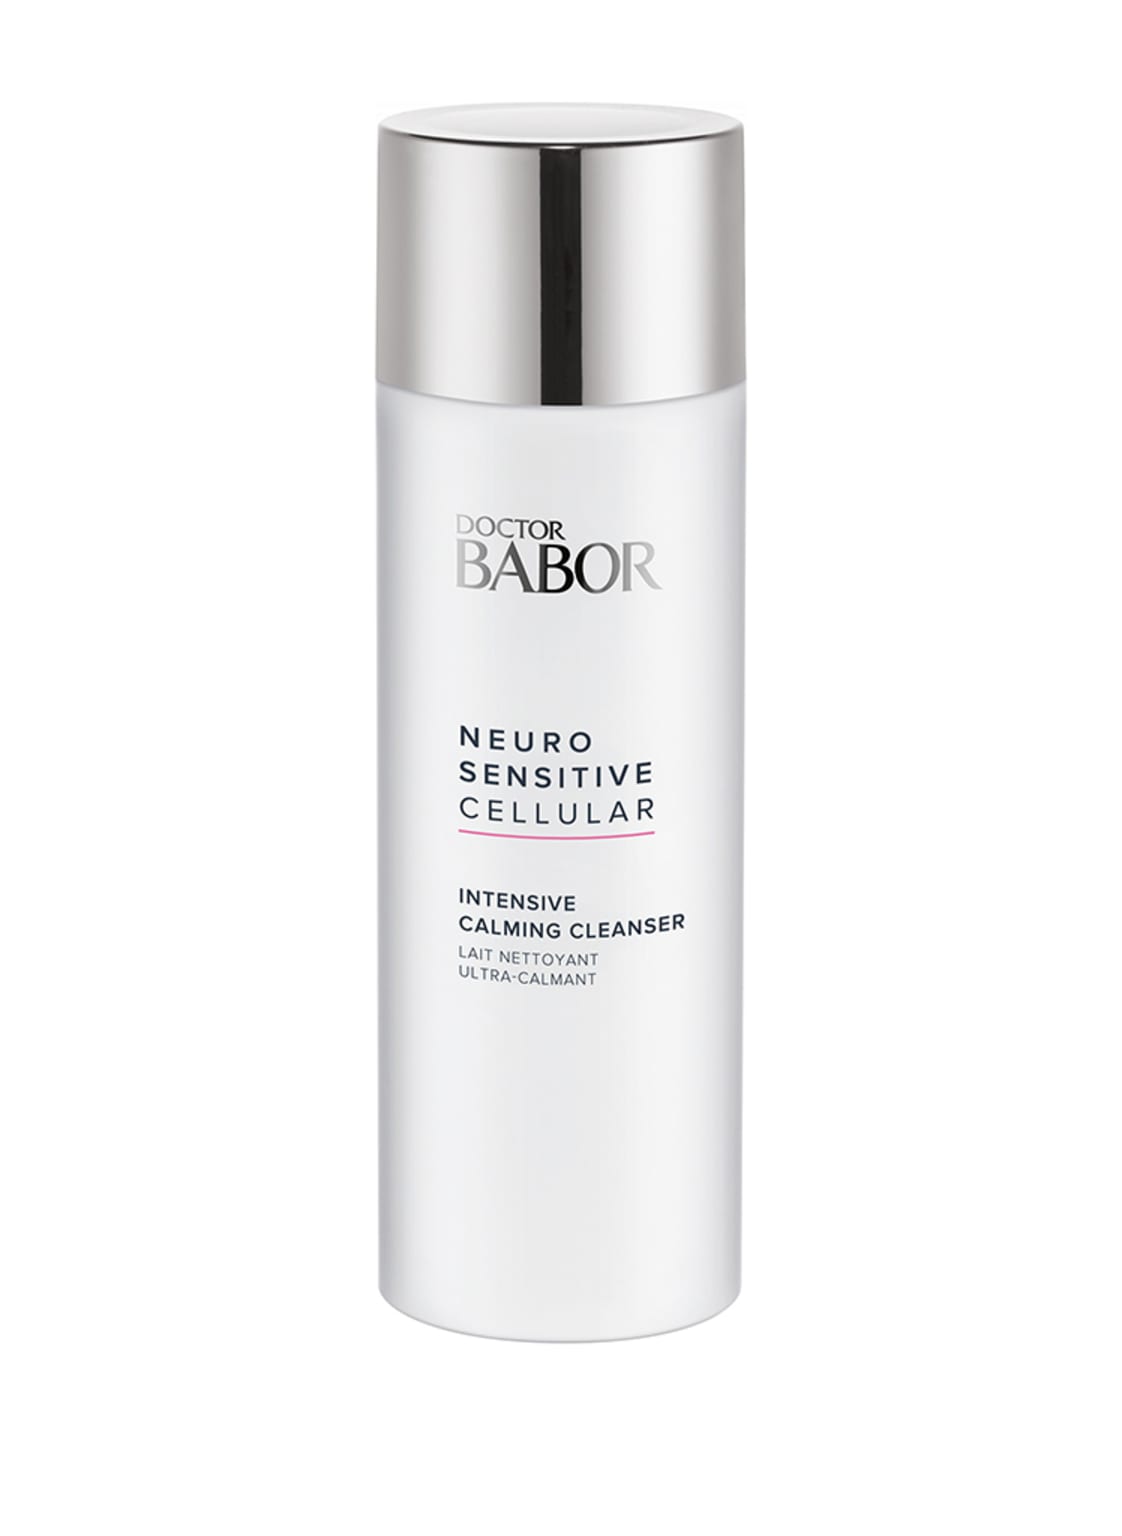 Image of Babor Doctor Babor Neuro Sensitive Cellular - Intensive Calming Cleanser 150 ml